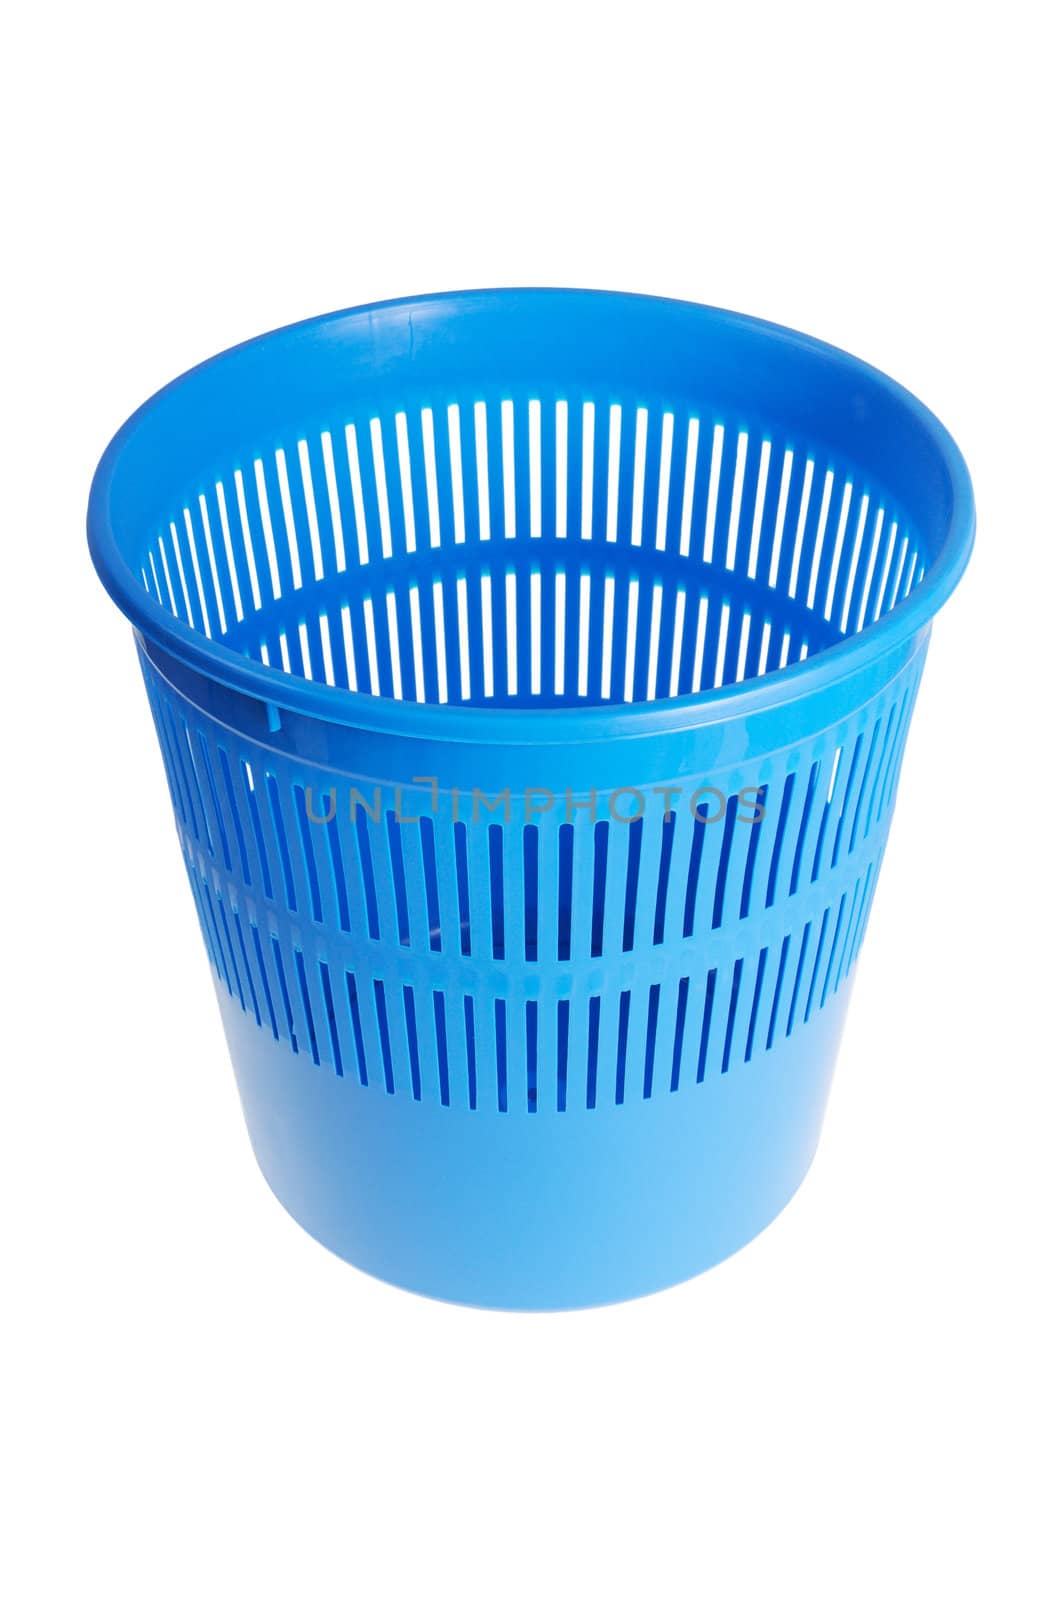 Blue wastebasket or trash can. Isolated on white background